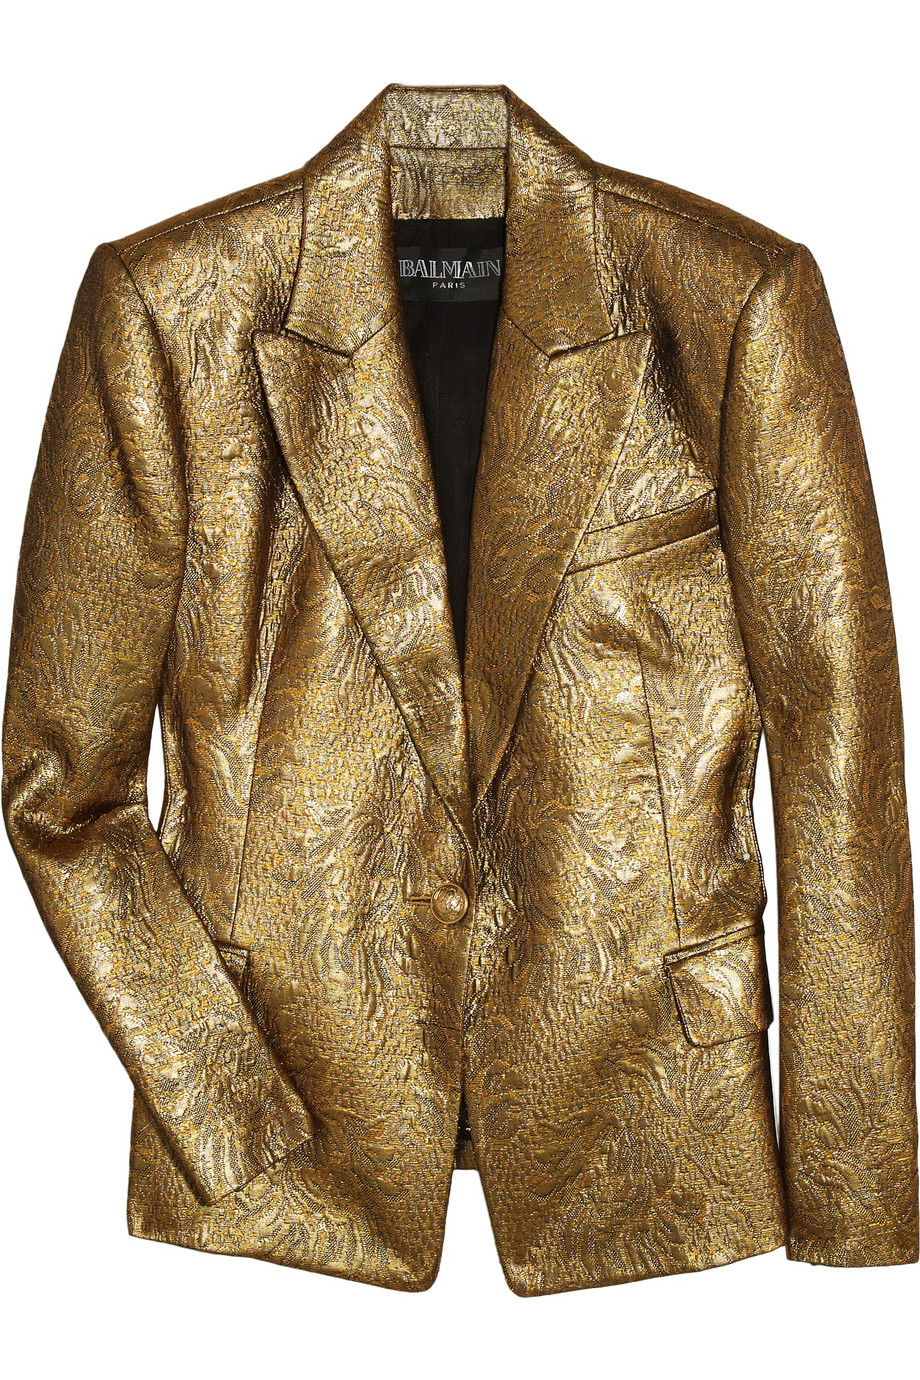 Balmain Metallic Brocade Jacket | Lyst